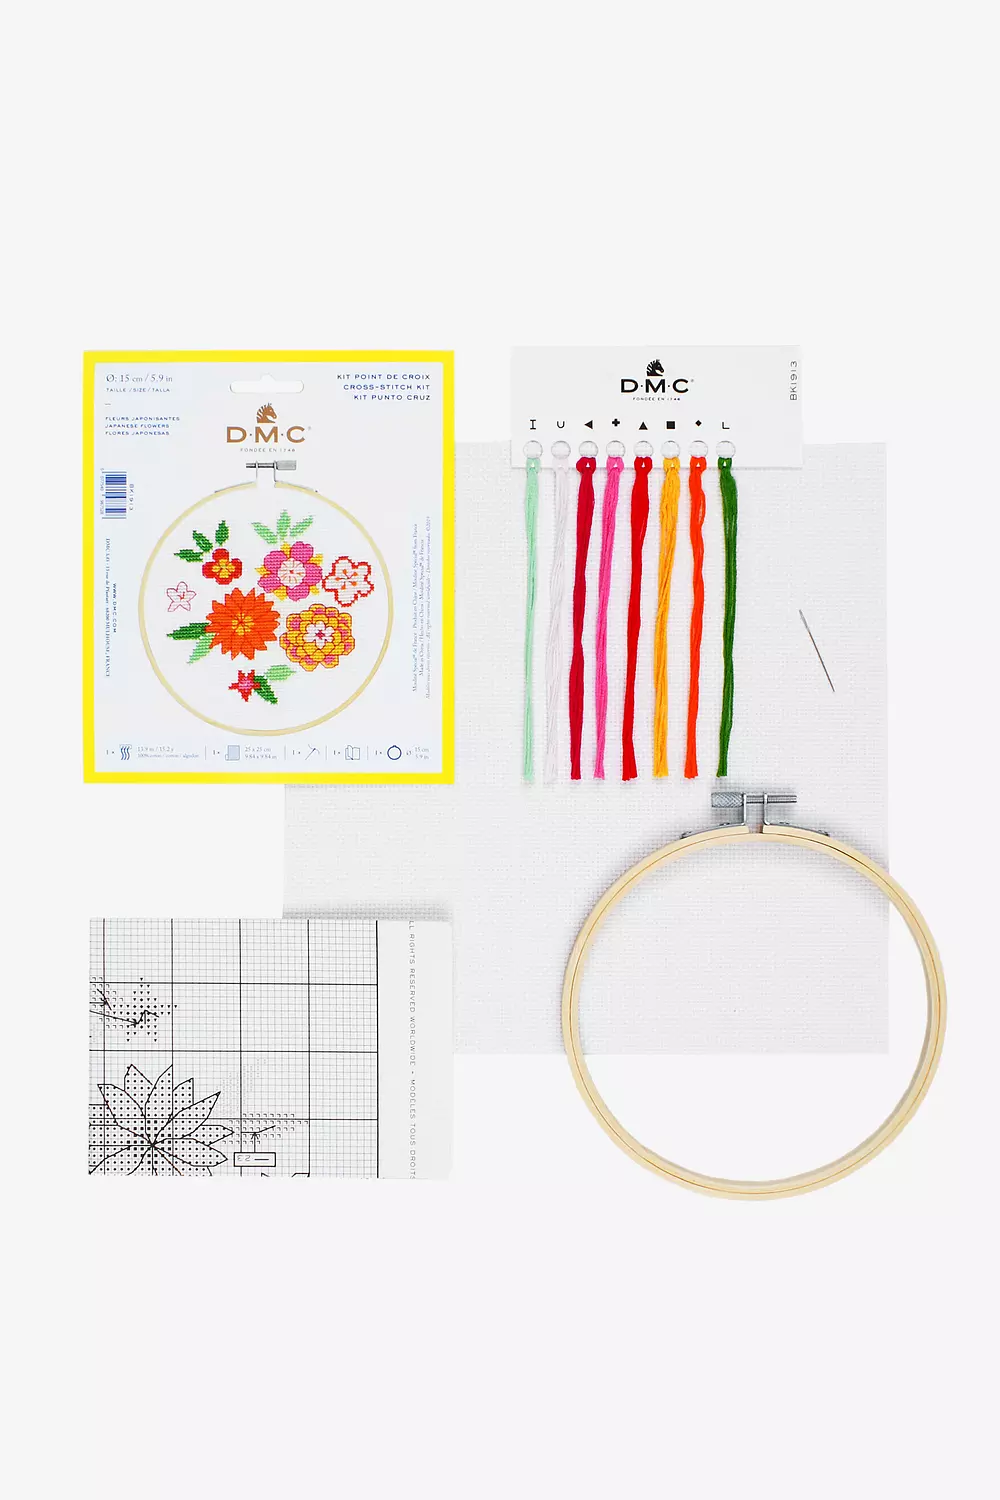 Flower Collection Cross Stitch Magic Paper Kit - DMC